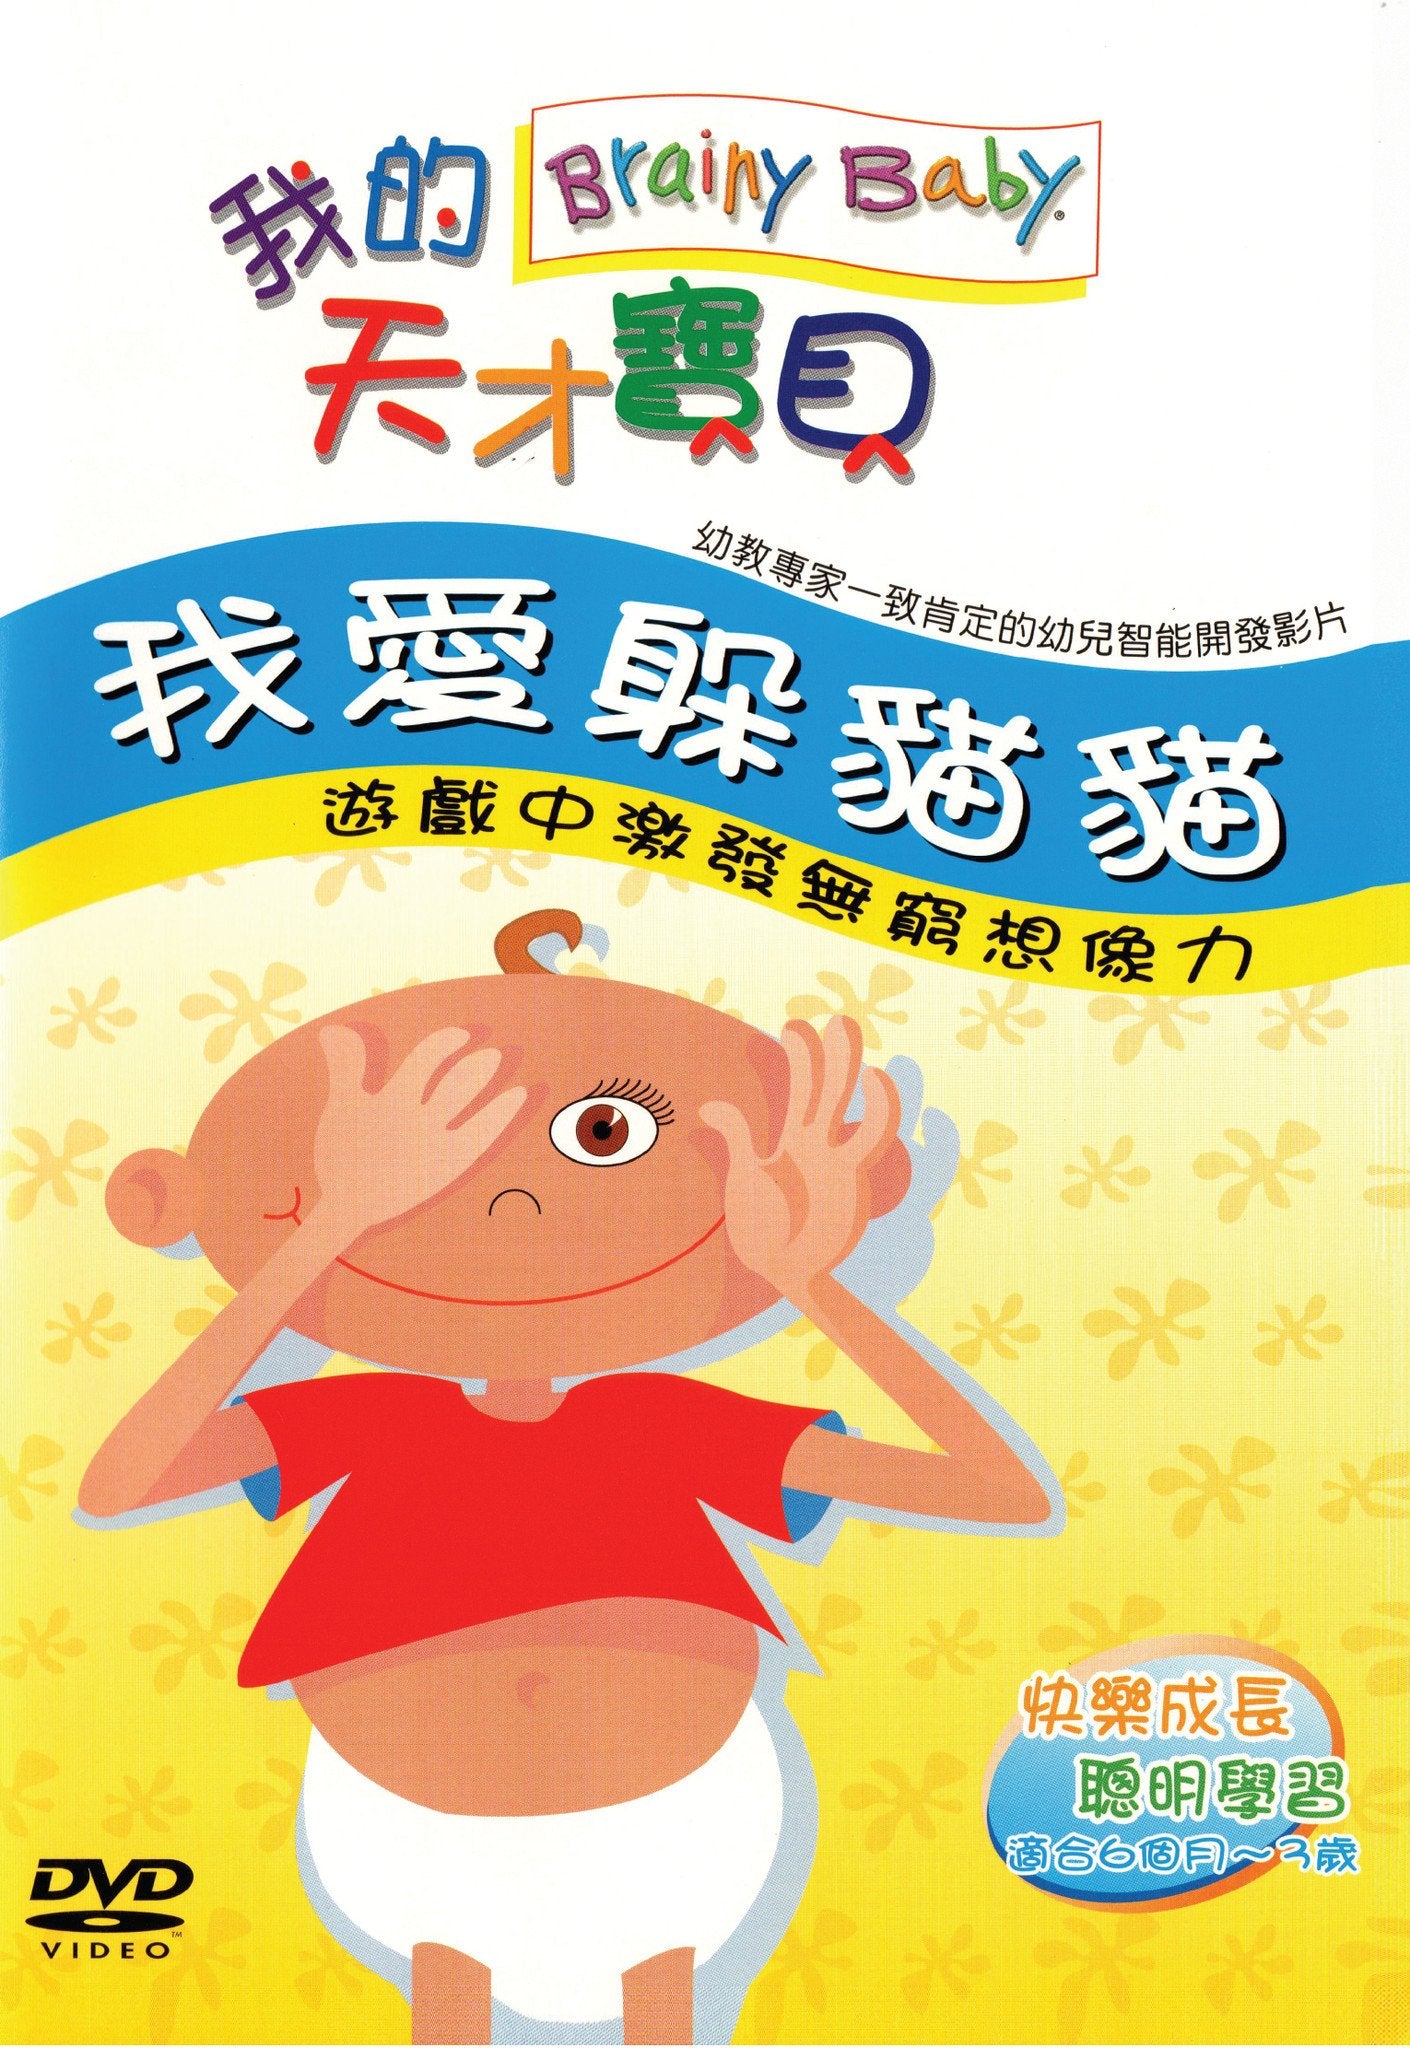 Brainy Baby Chinese Language Peek-a-Boo DVD